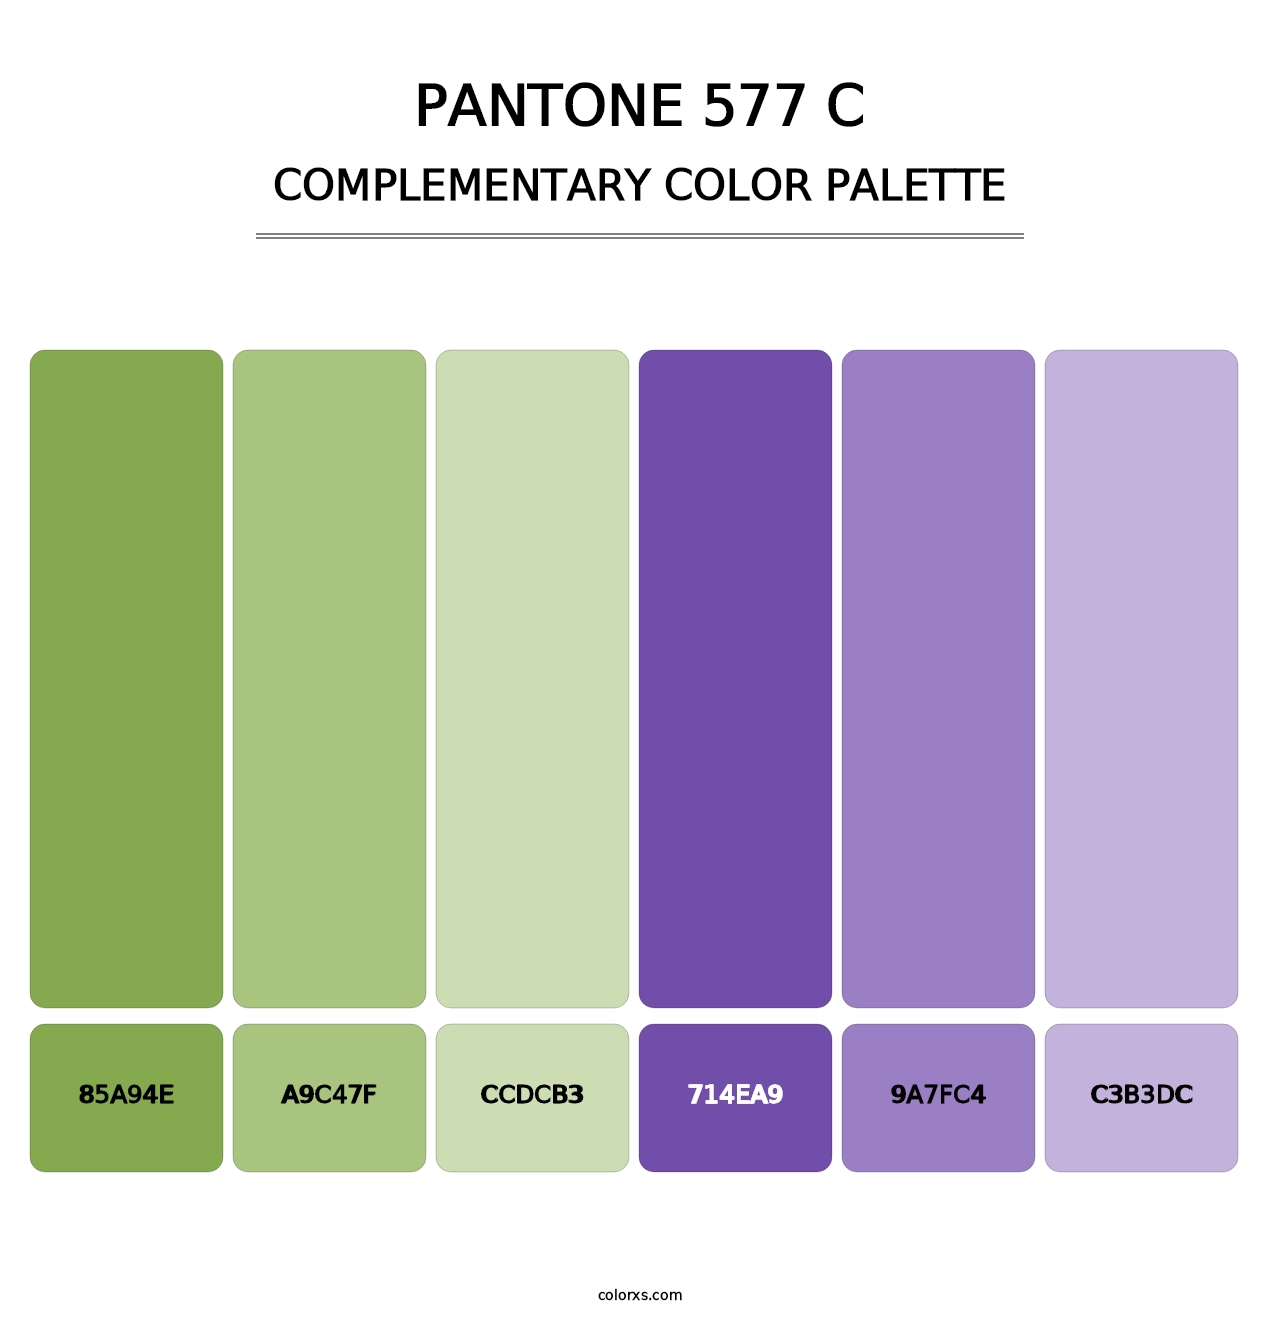 PANTONE 577 C - Complementary Color Palette